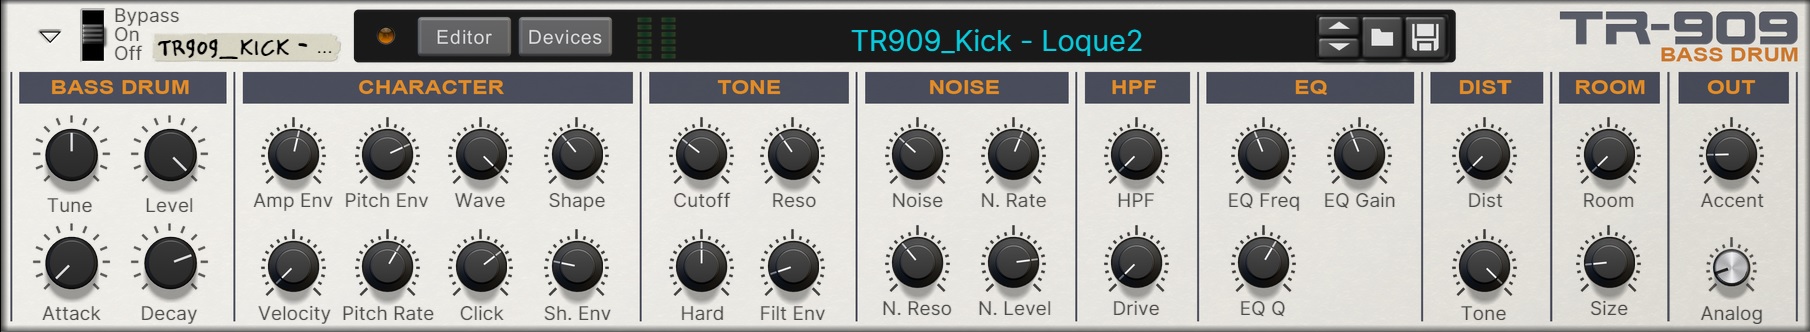 TR909_Kick-Loque2.jpg